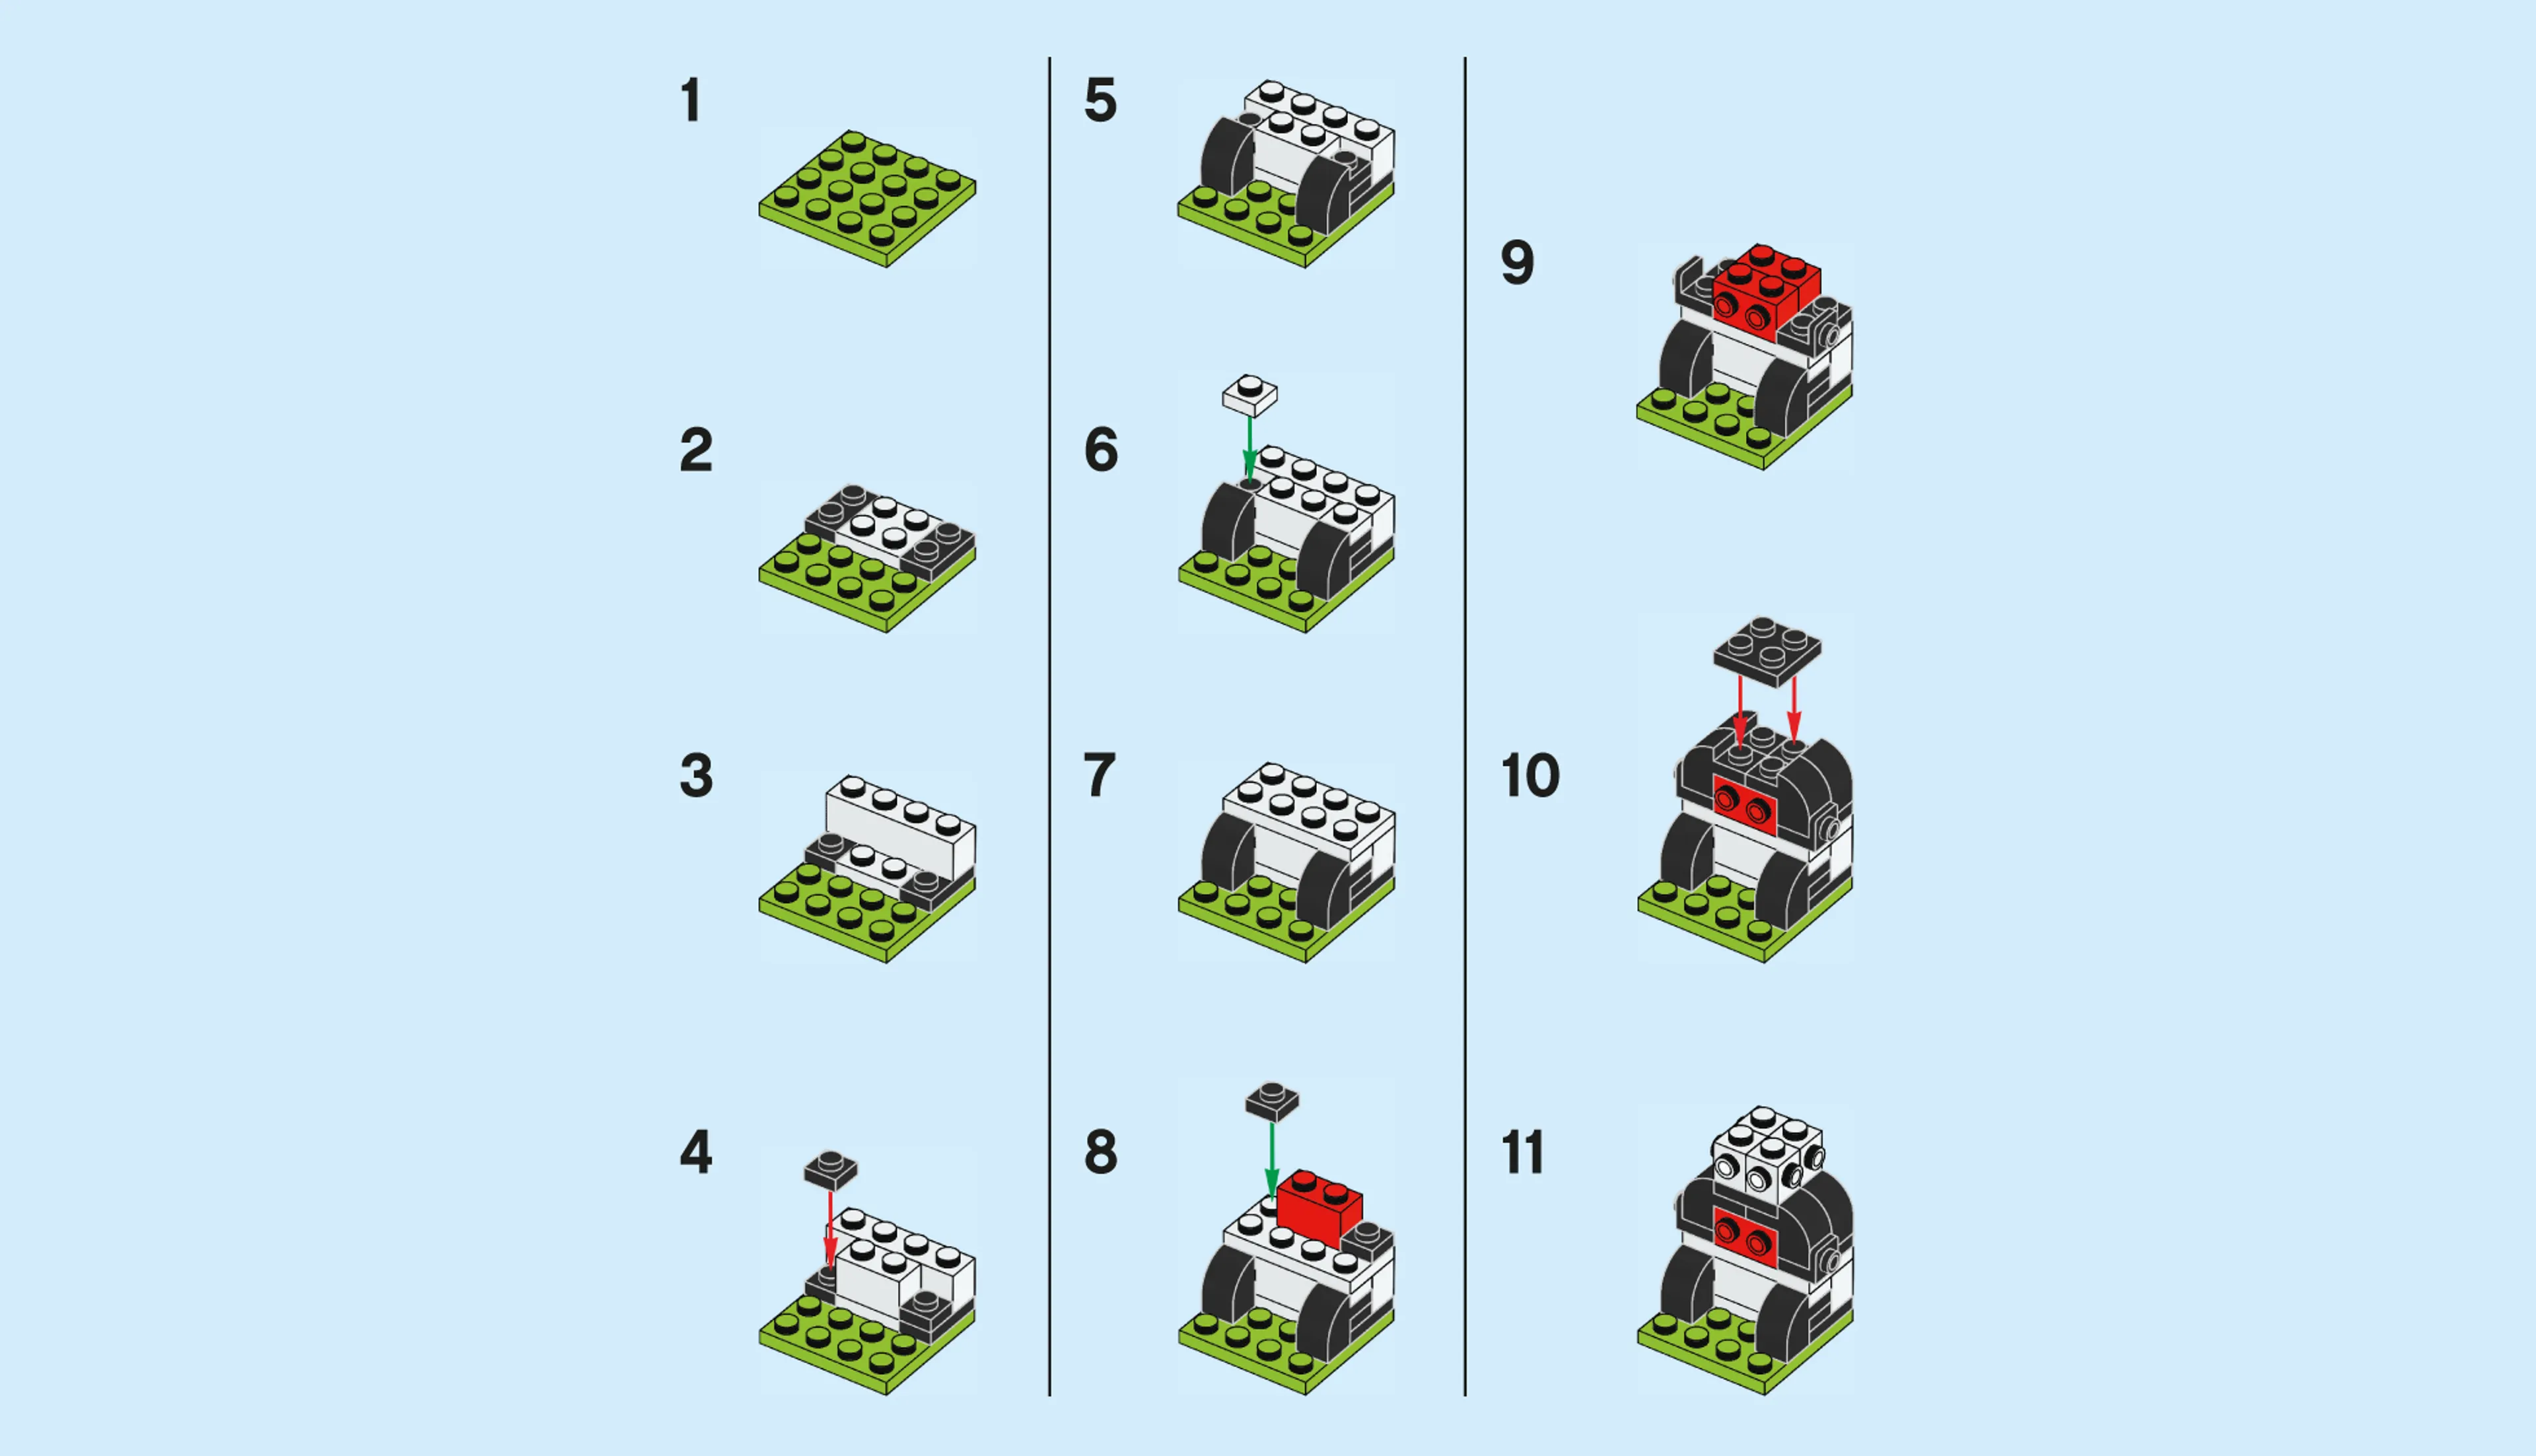 Building a LEGO panda